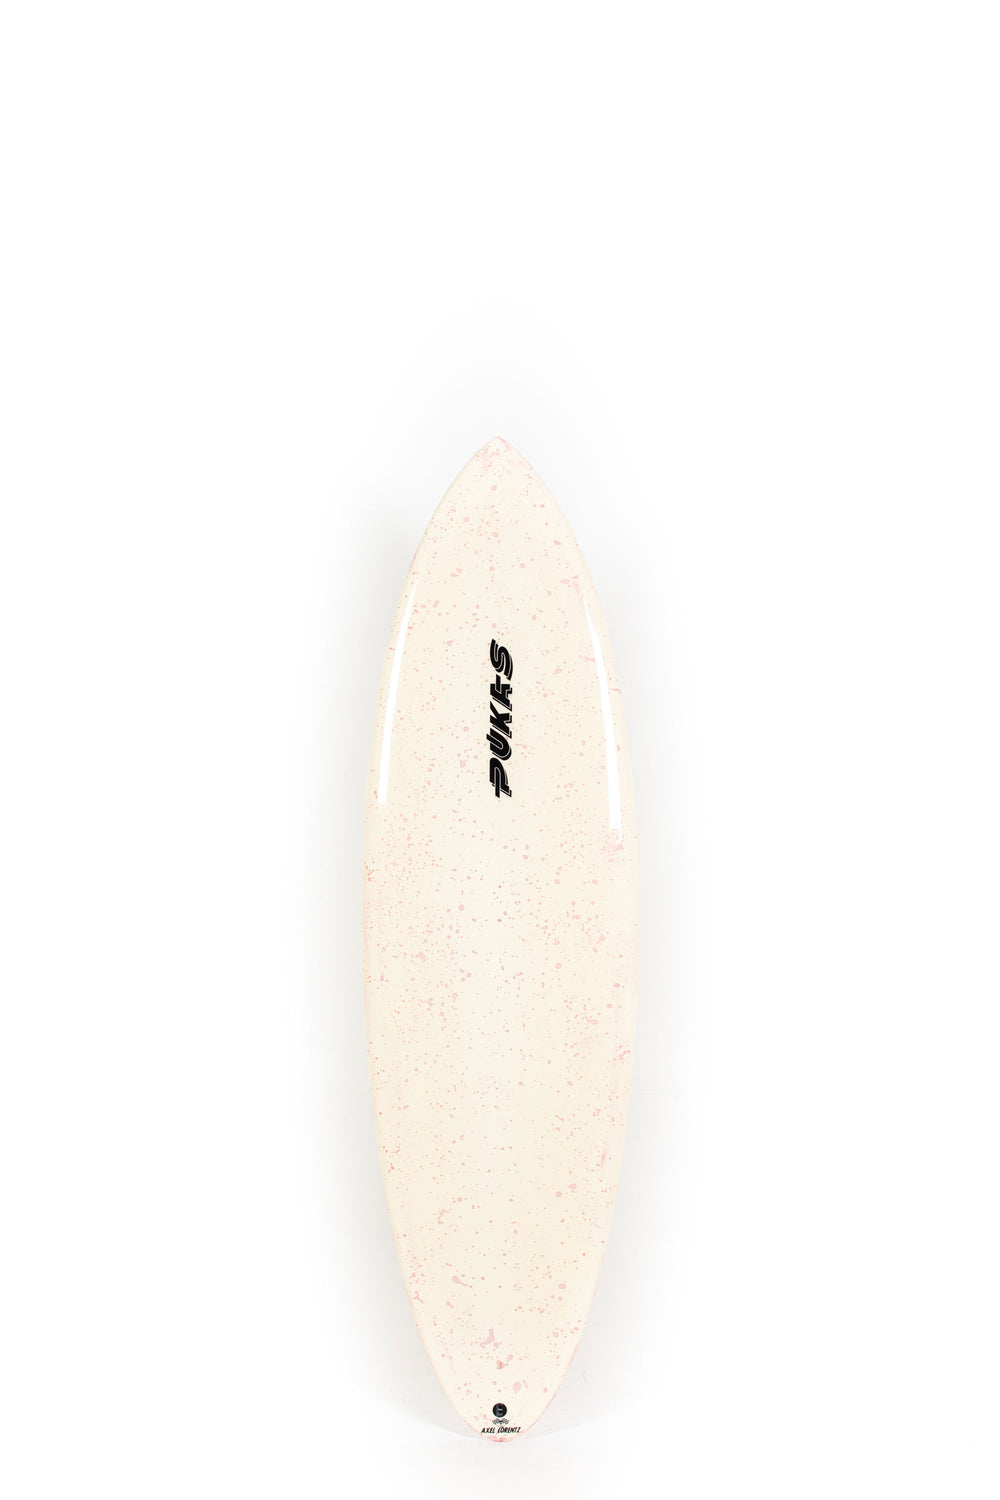 Pukas-Surf-Shop-Lost-Surfboards-69-Evolution-Axel-Lorentz-6_3_